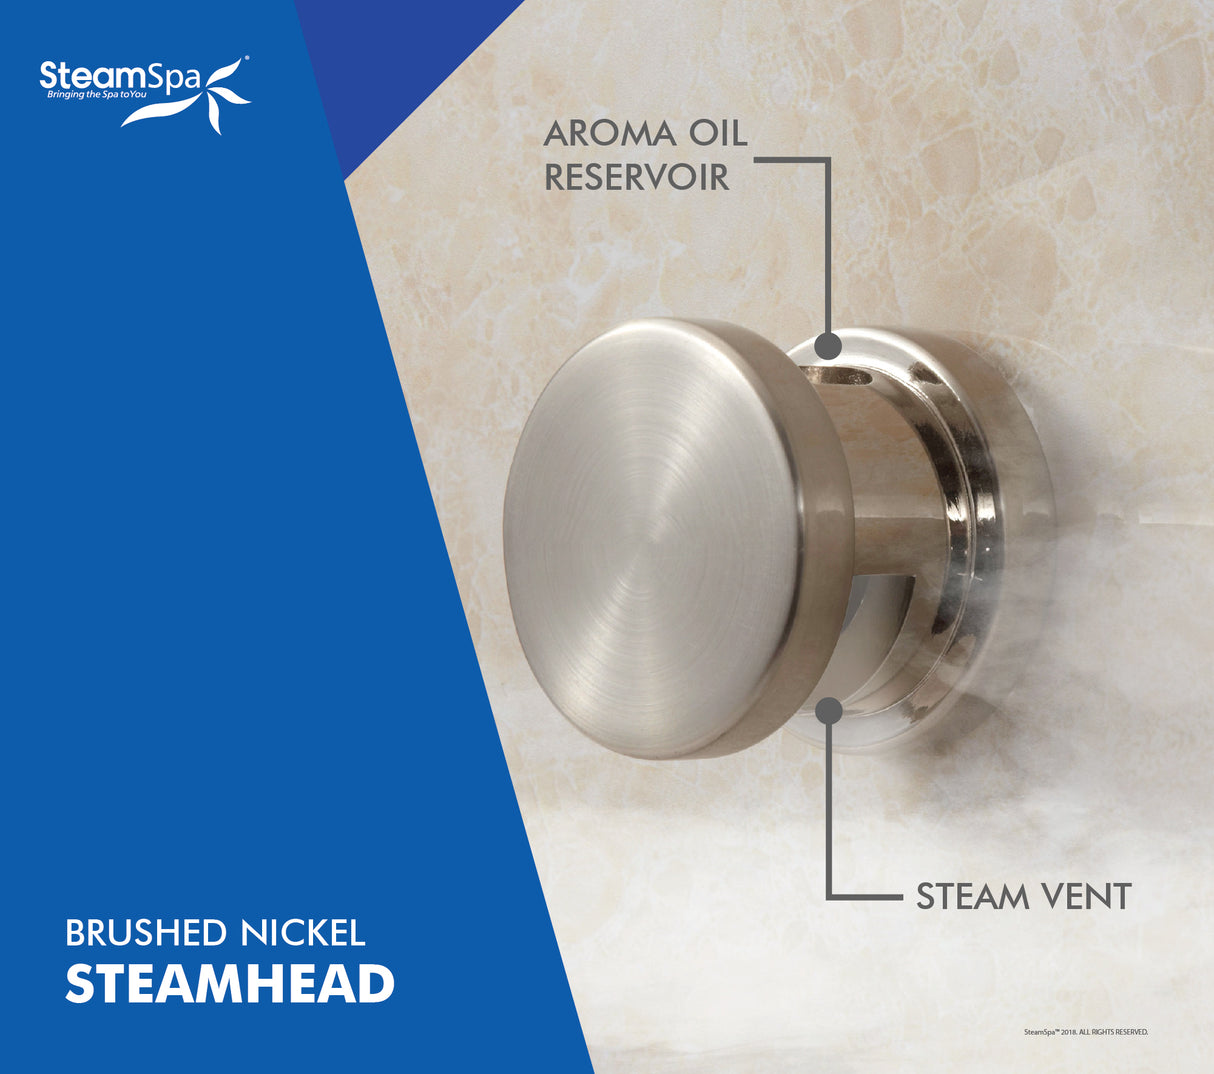 SteamSpa Premium 12 KW QuickStart Acu-Steam Bath Generator Package with Built-in Auto Drain in Brushed Nickel PRT1200BN-A